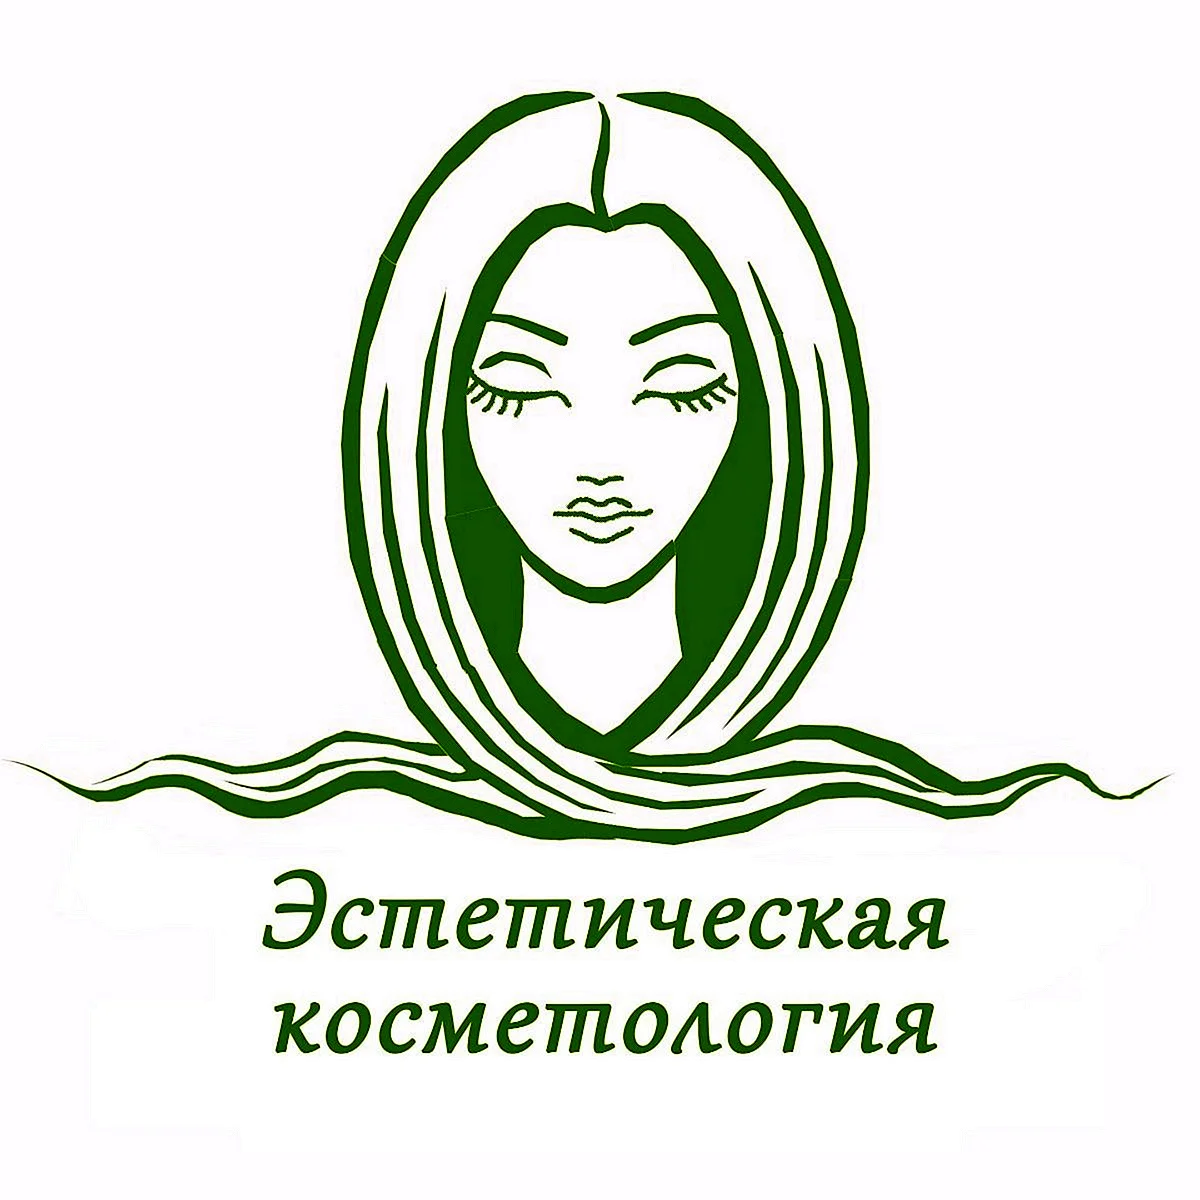 Косметология логотип